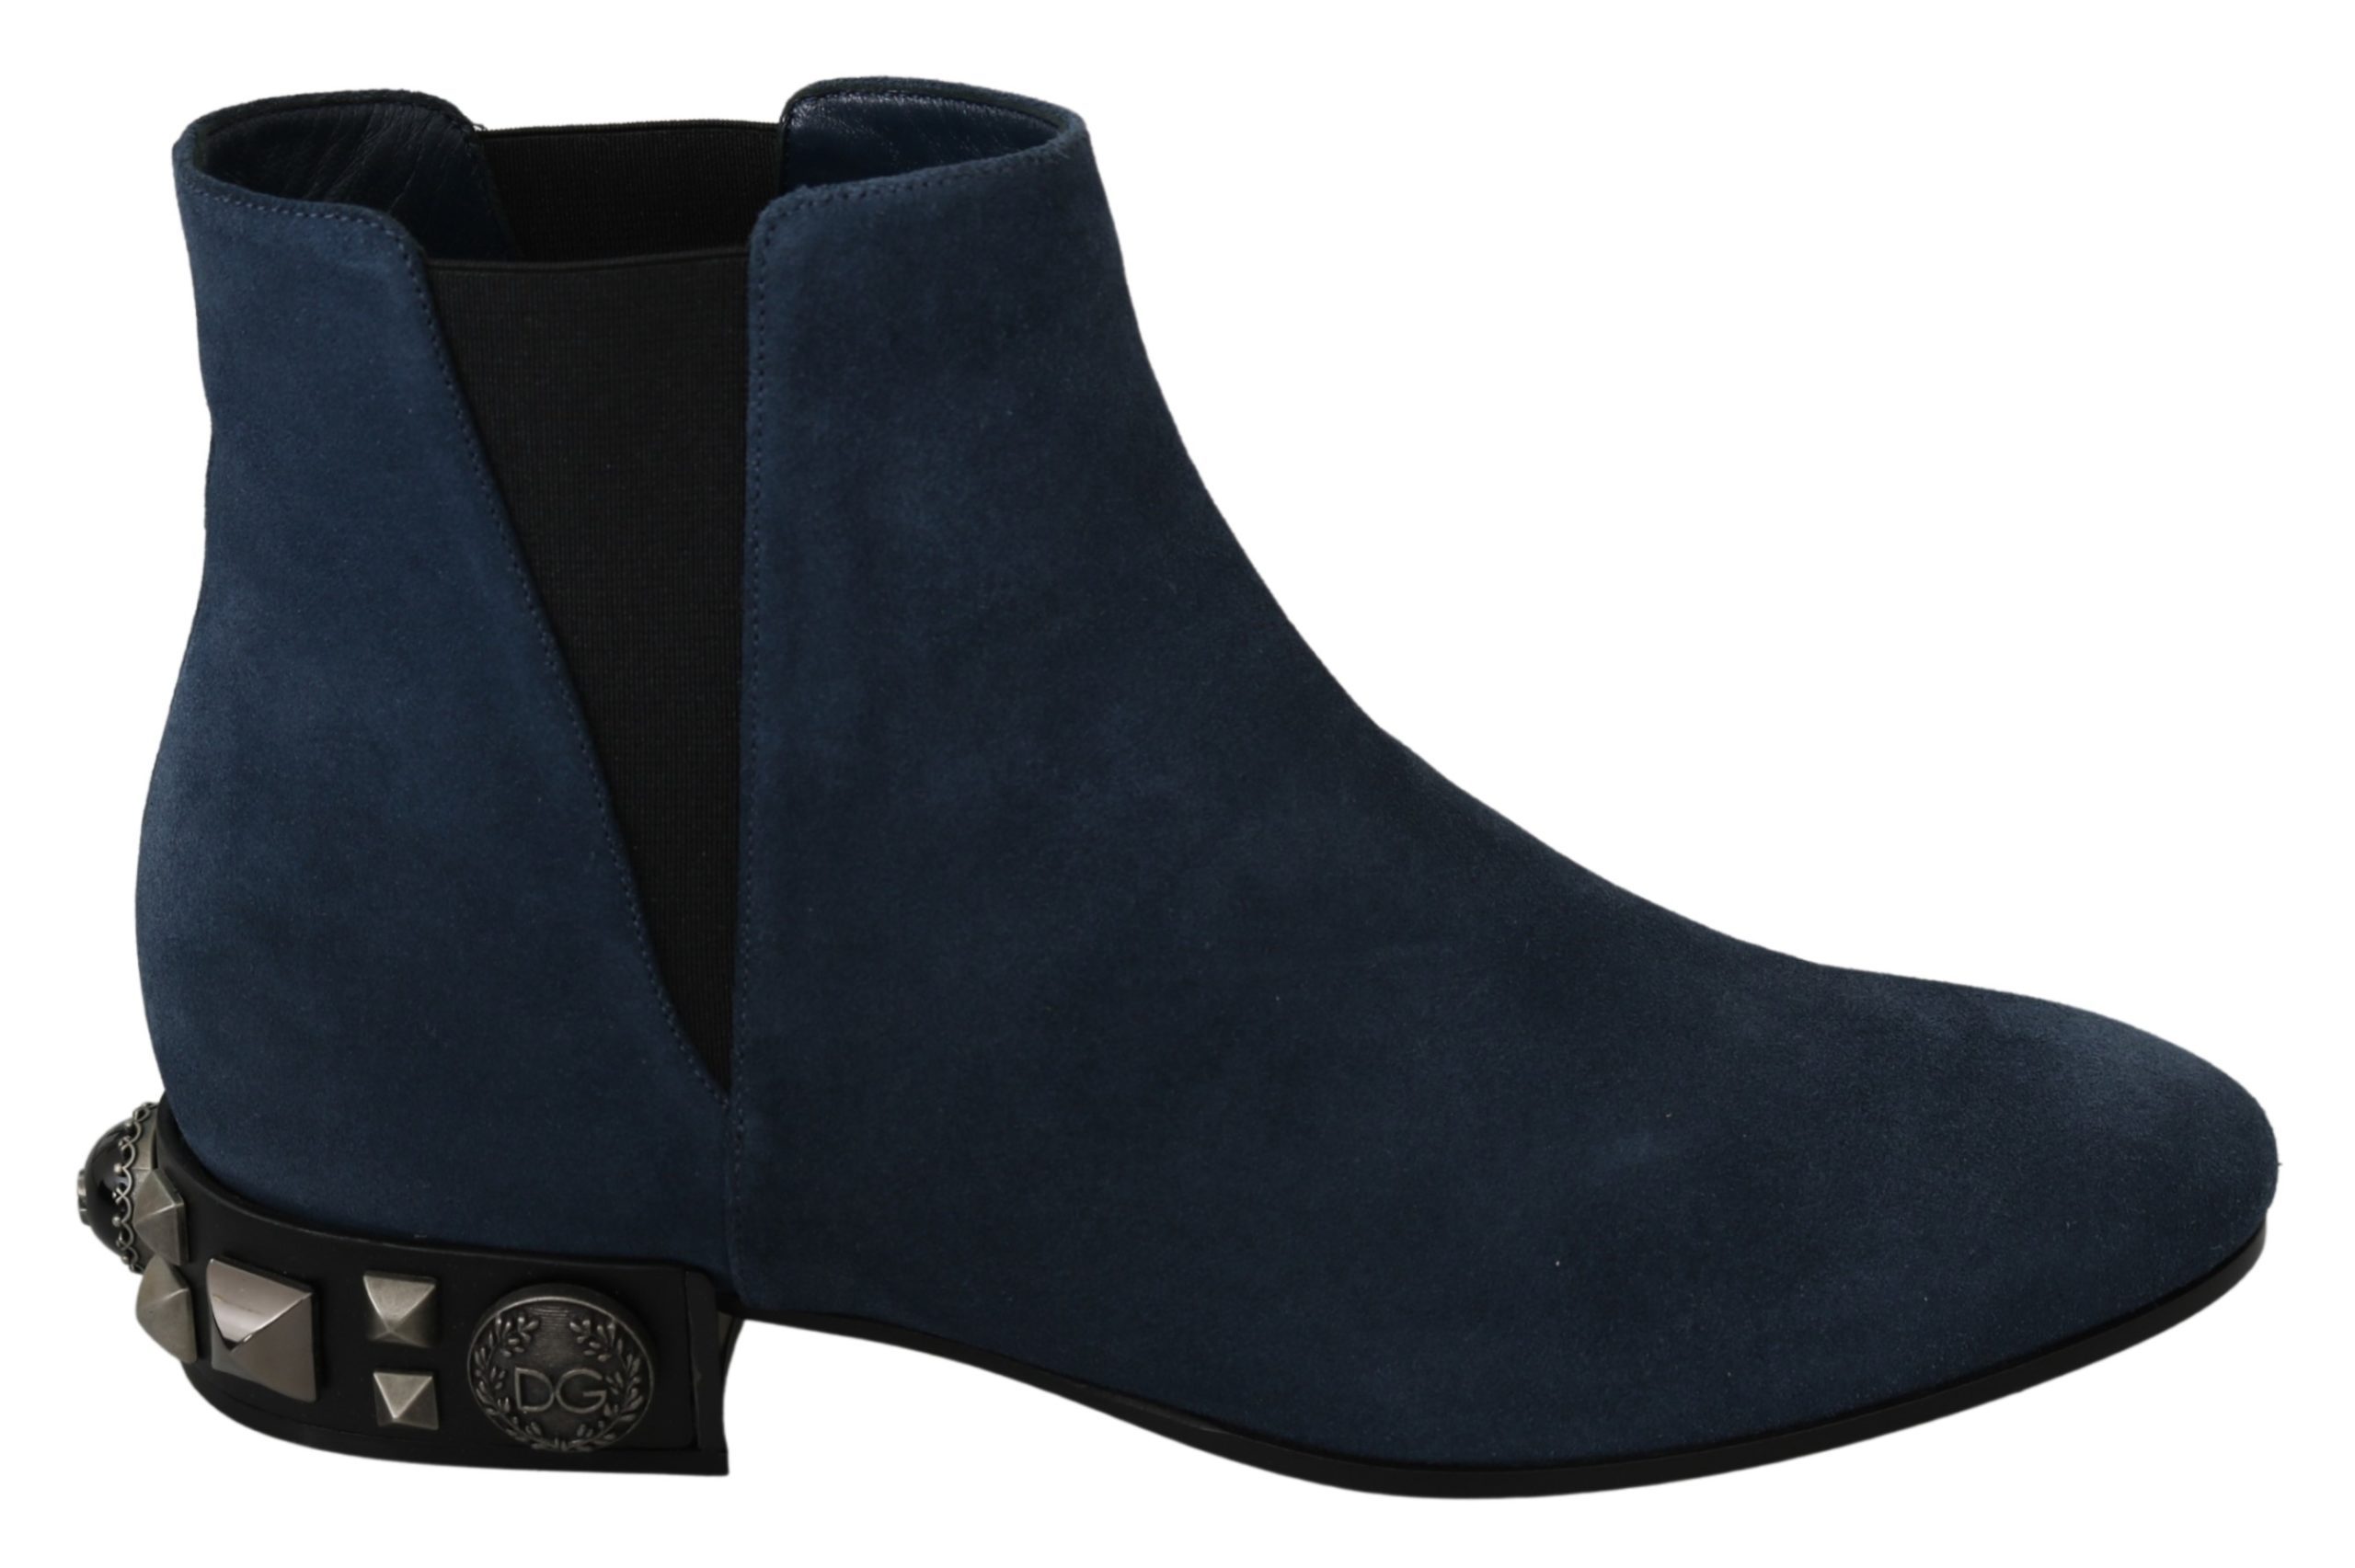 Dolce & Gabbana Women's Suede Studs Ankle High Boot Navy Blue LA7076 - EU38.5/US8